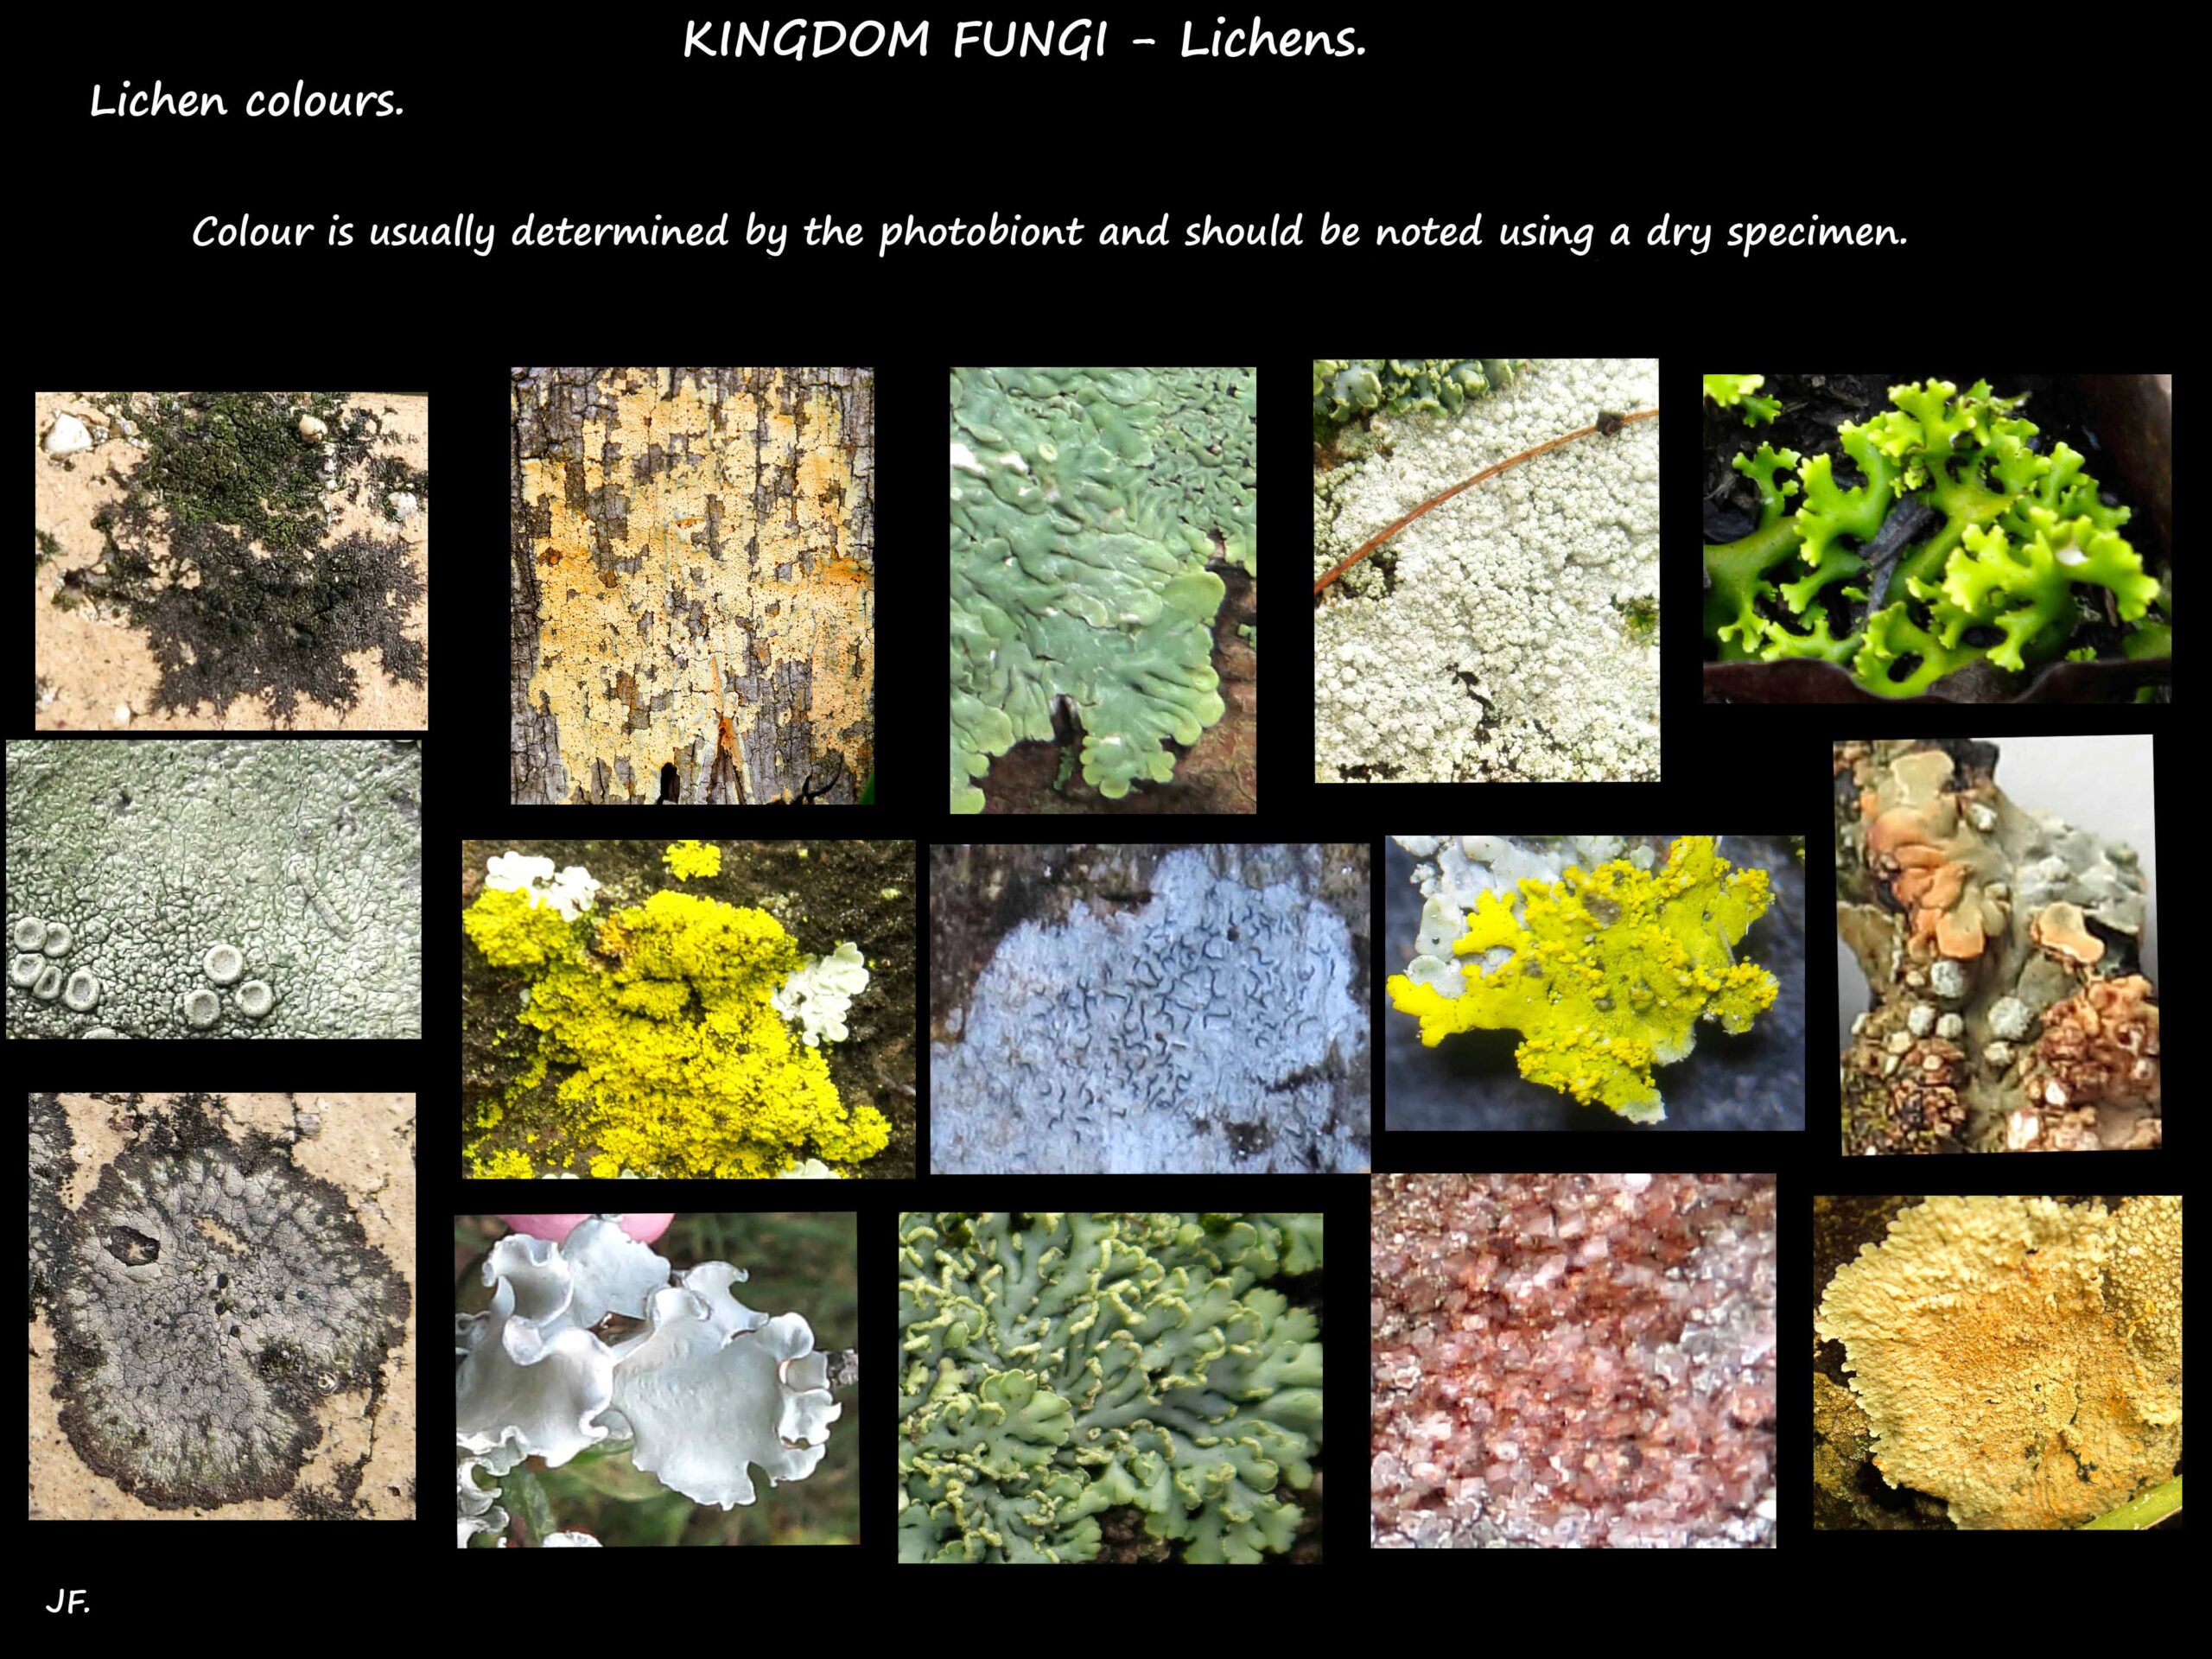 6 Lichens come in many colours